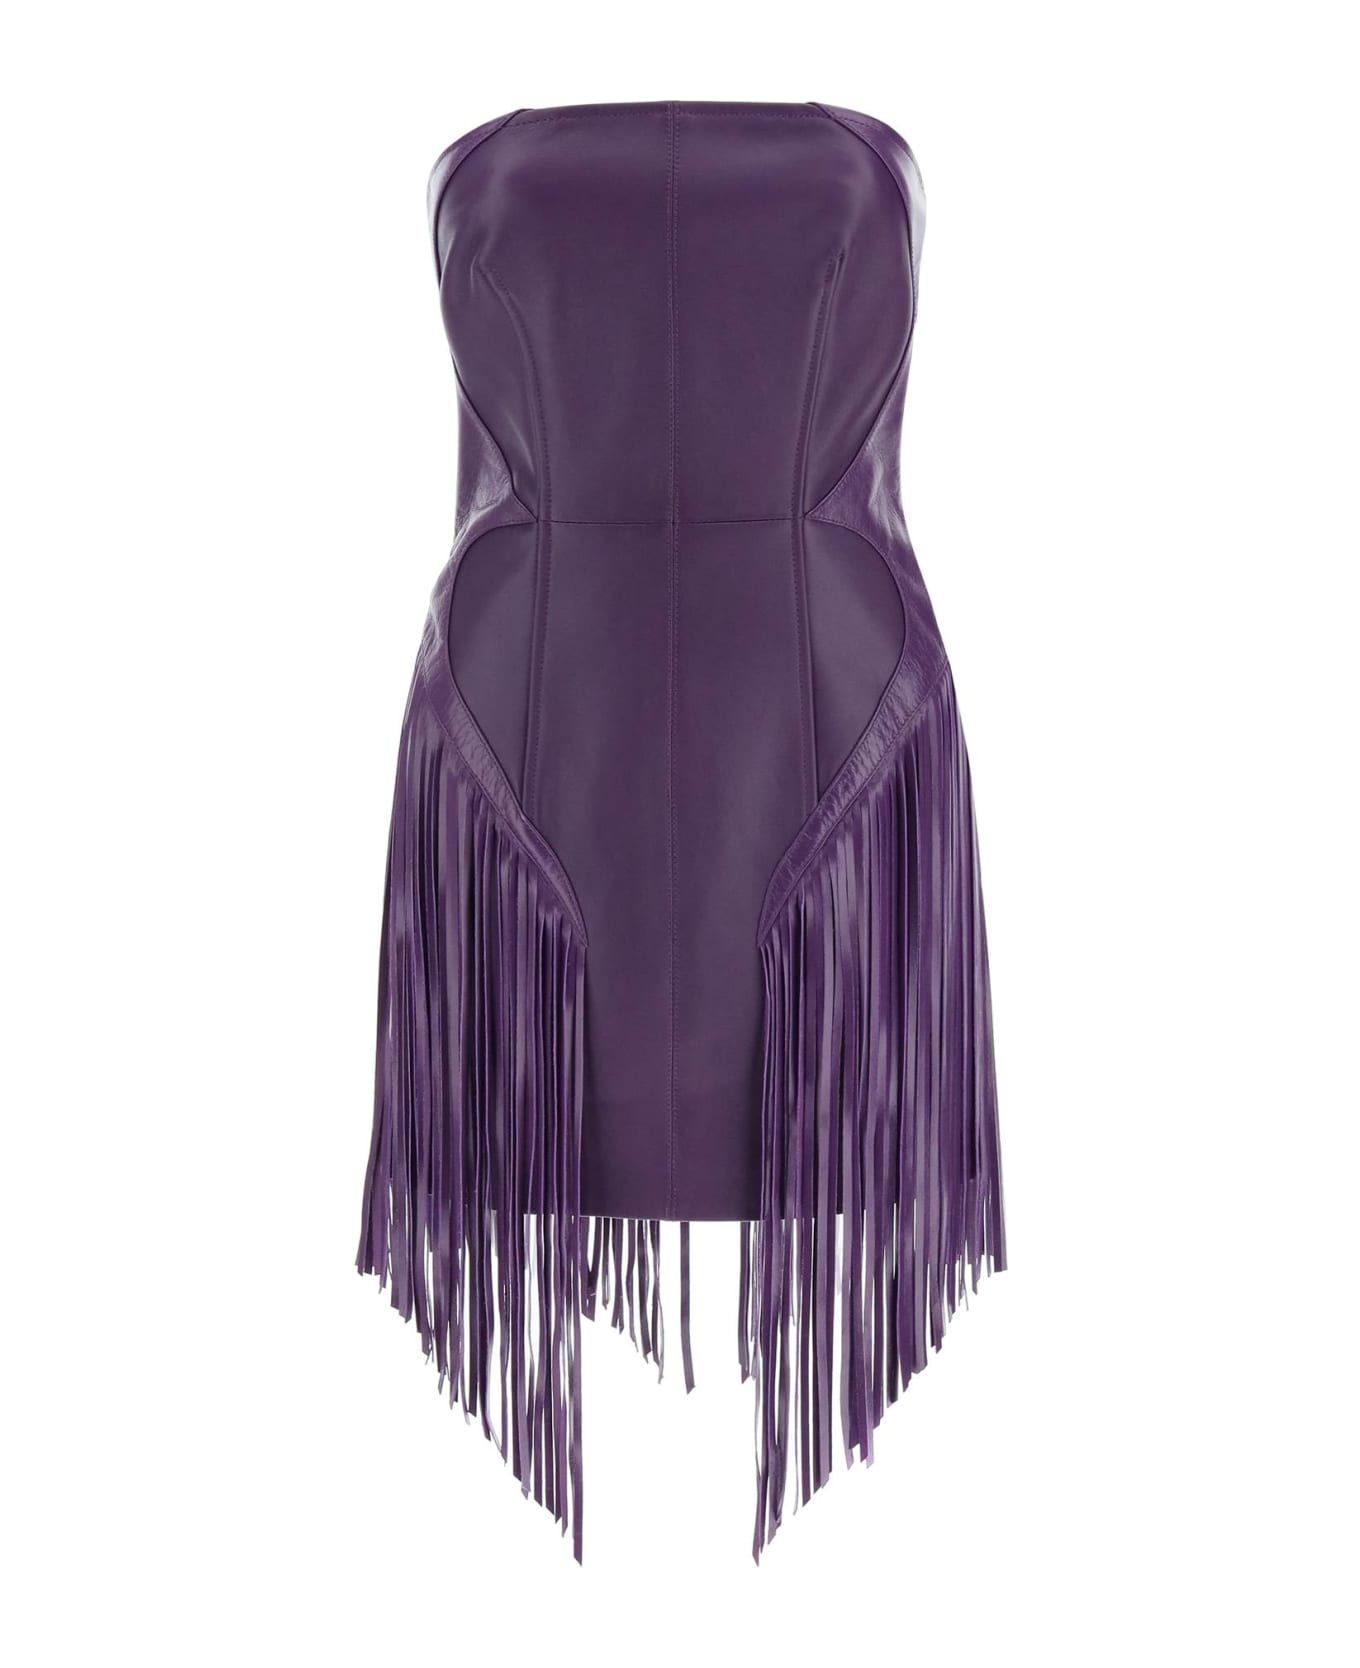 Versace Fringed Leather Minidress - BRIGHT DARK ORCHID (Purple)